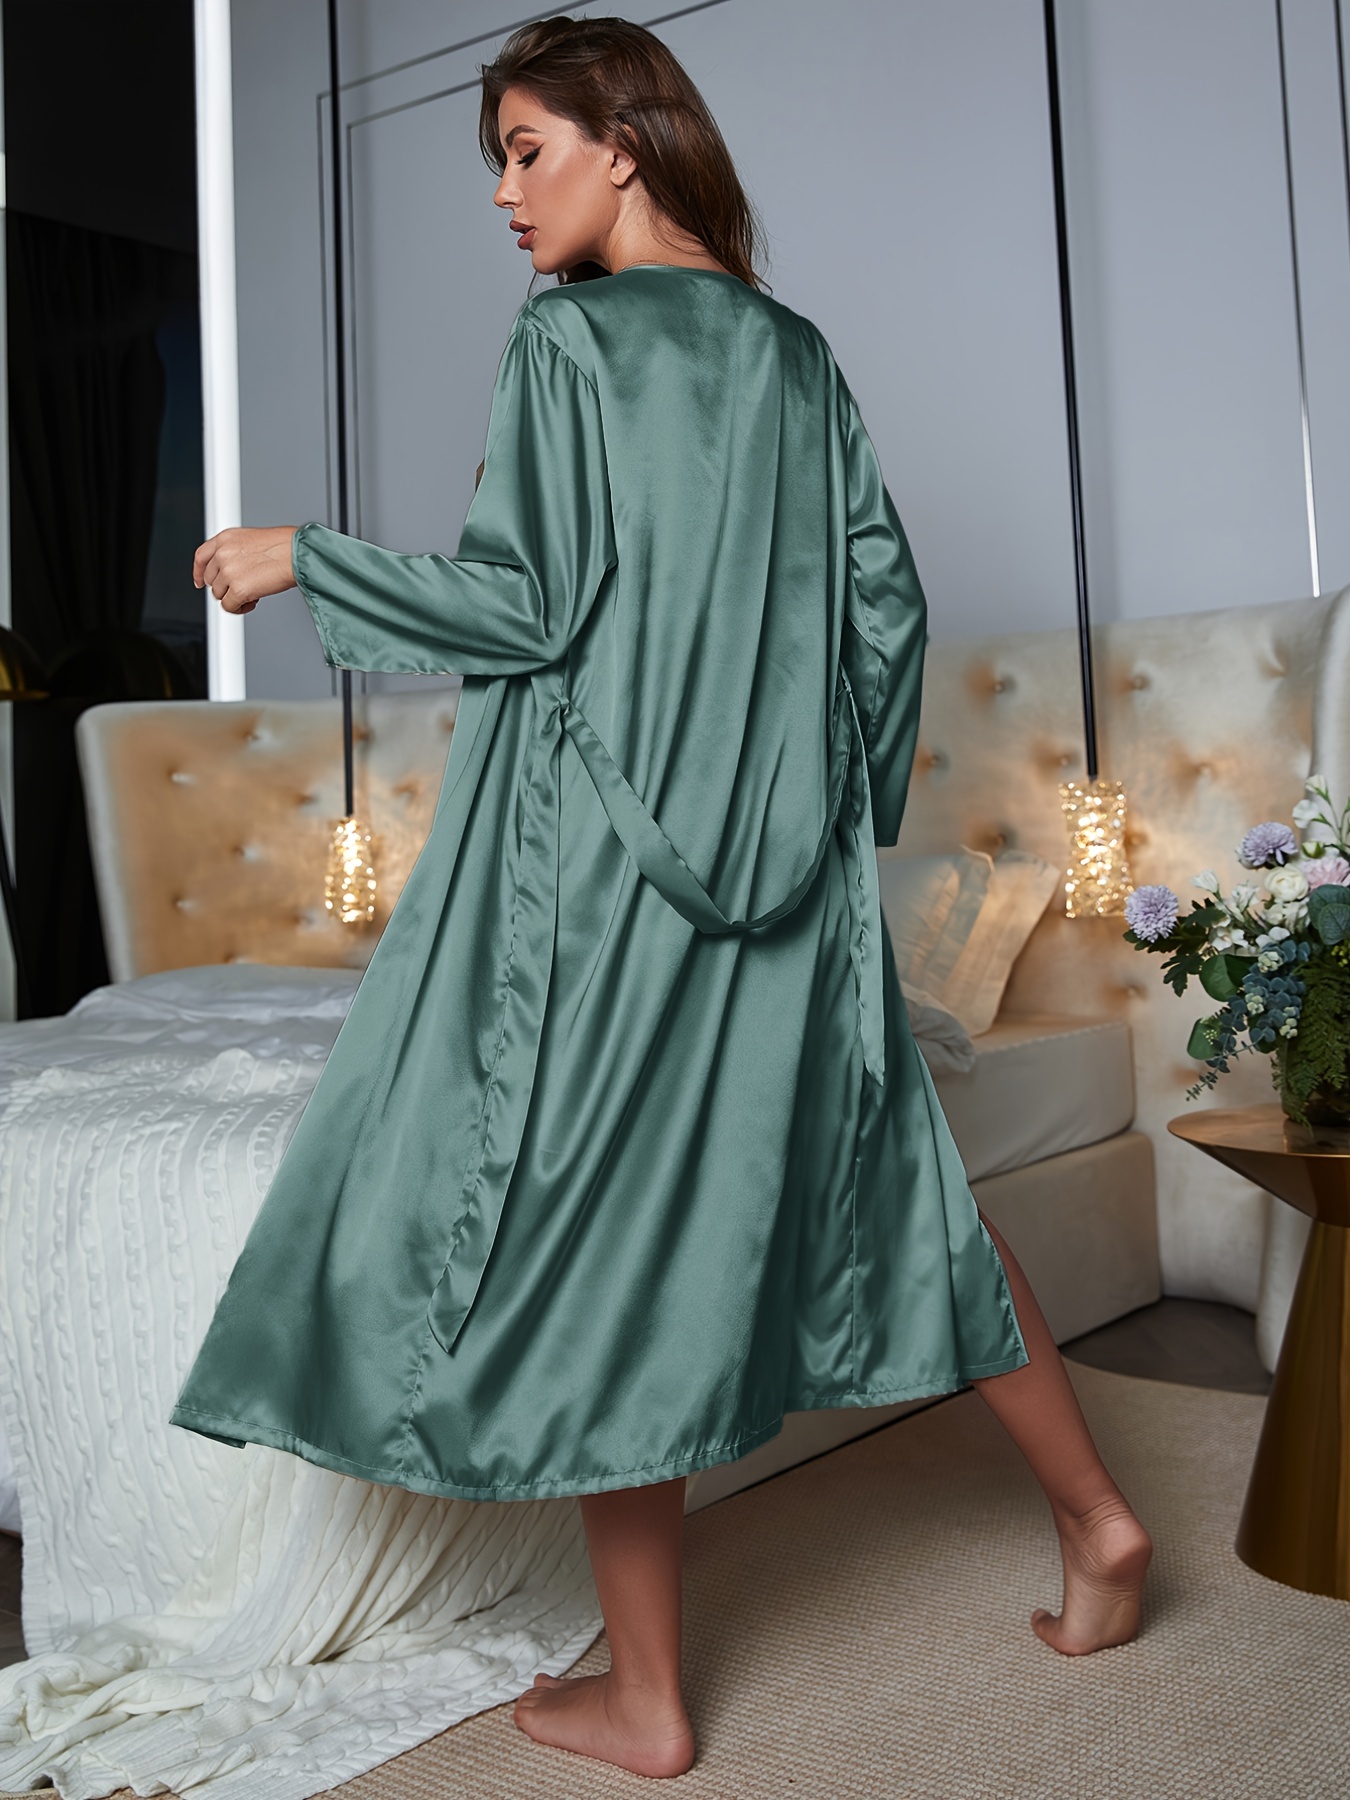 HGM 5PC Silk Robe Sleep Suit Women's Lace Satin Pajamas Gown Set V